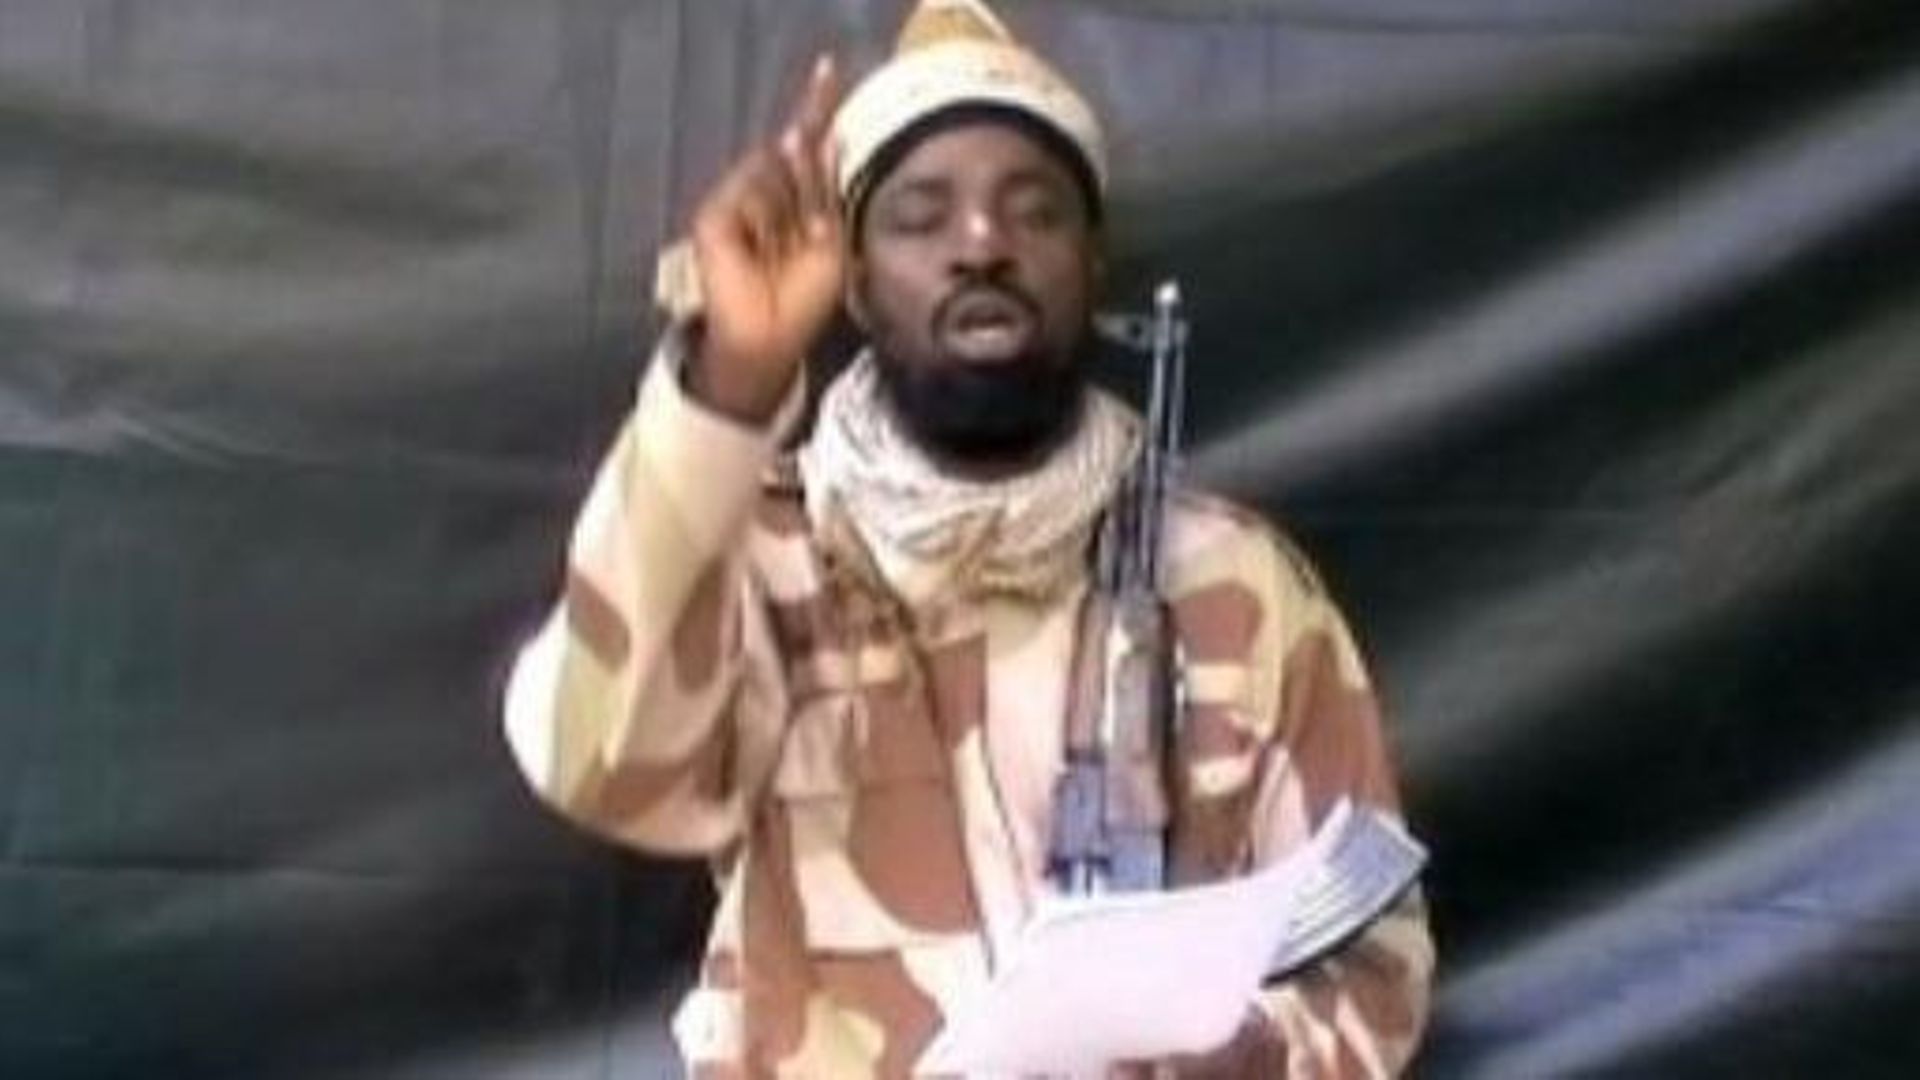 Capture d'écran non datée du chef du groupe islamiste radical nigérian Boko Haram, Abubakar Shekau, dans un lieu inconnu